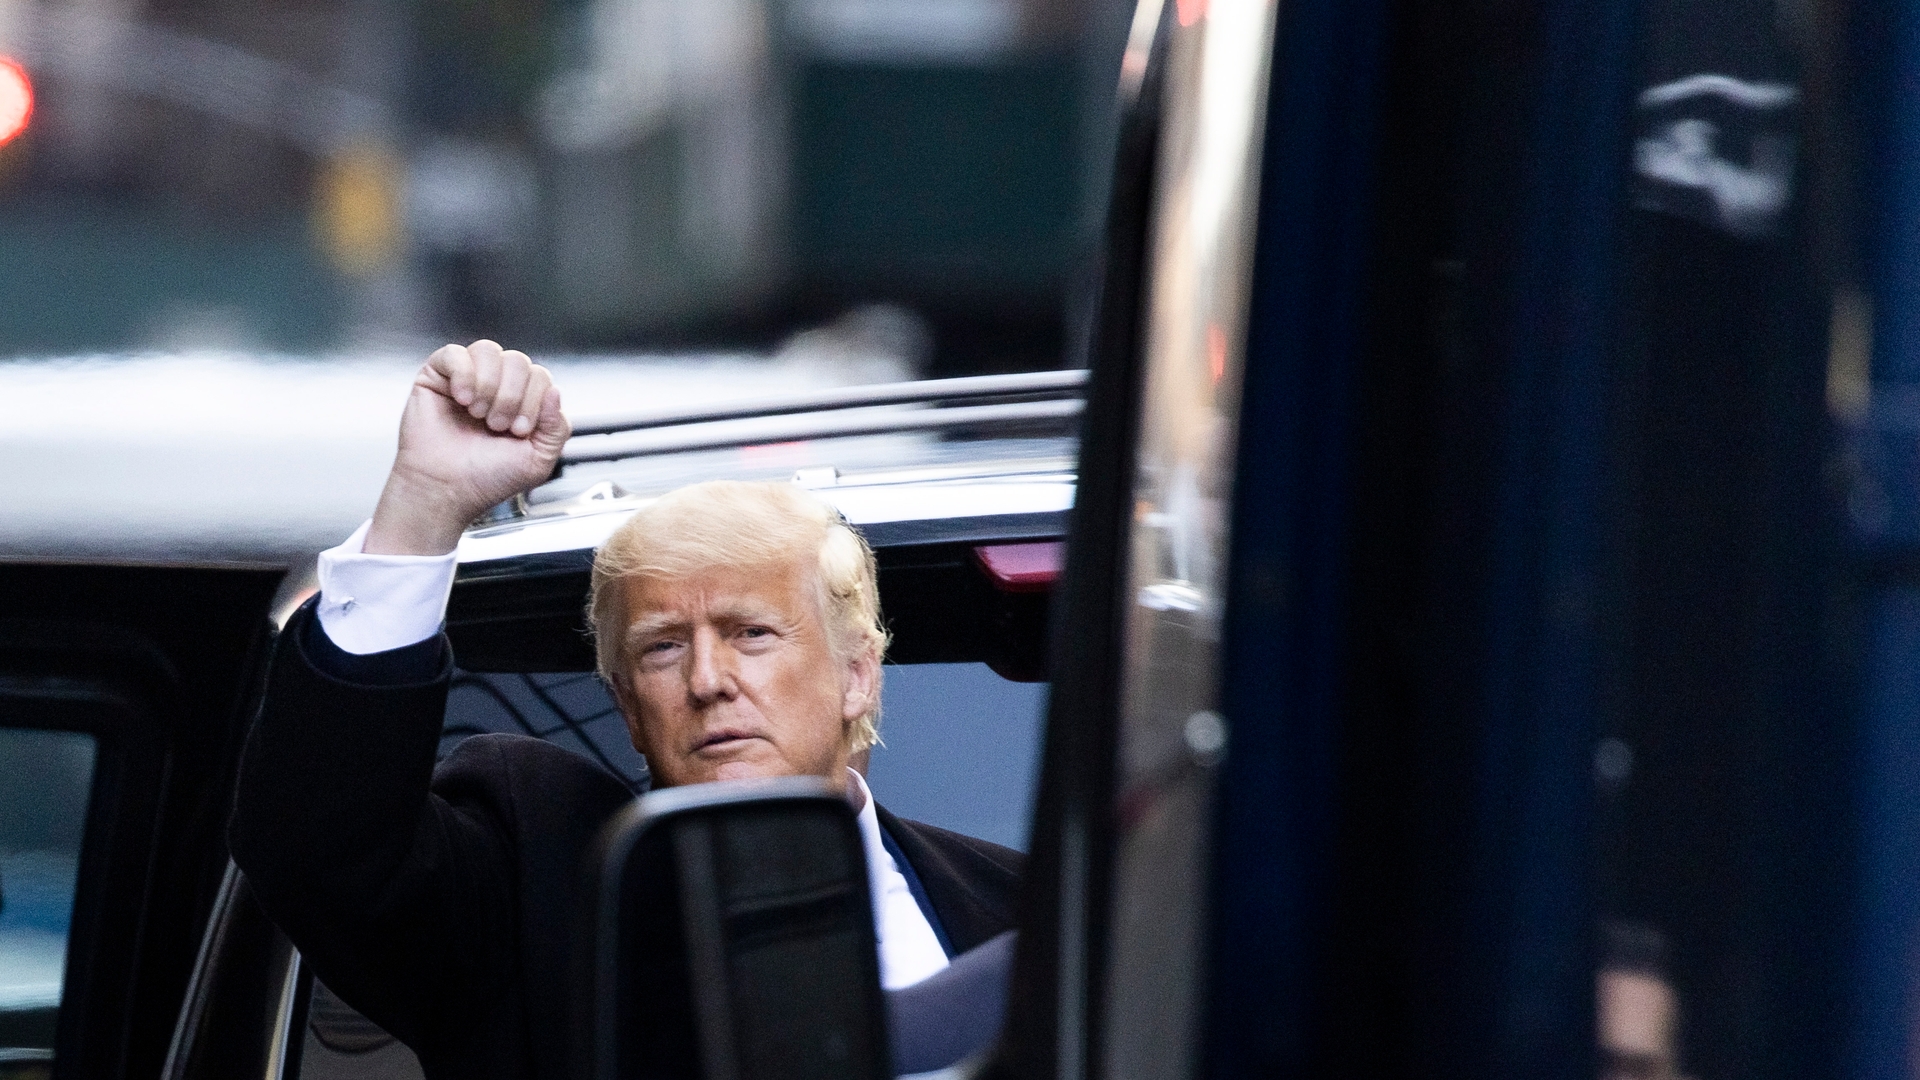 Former President Trump Leaves Building in New York